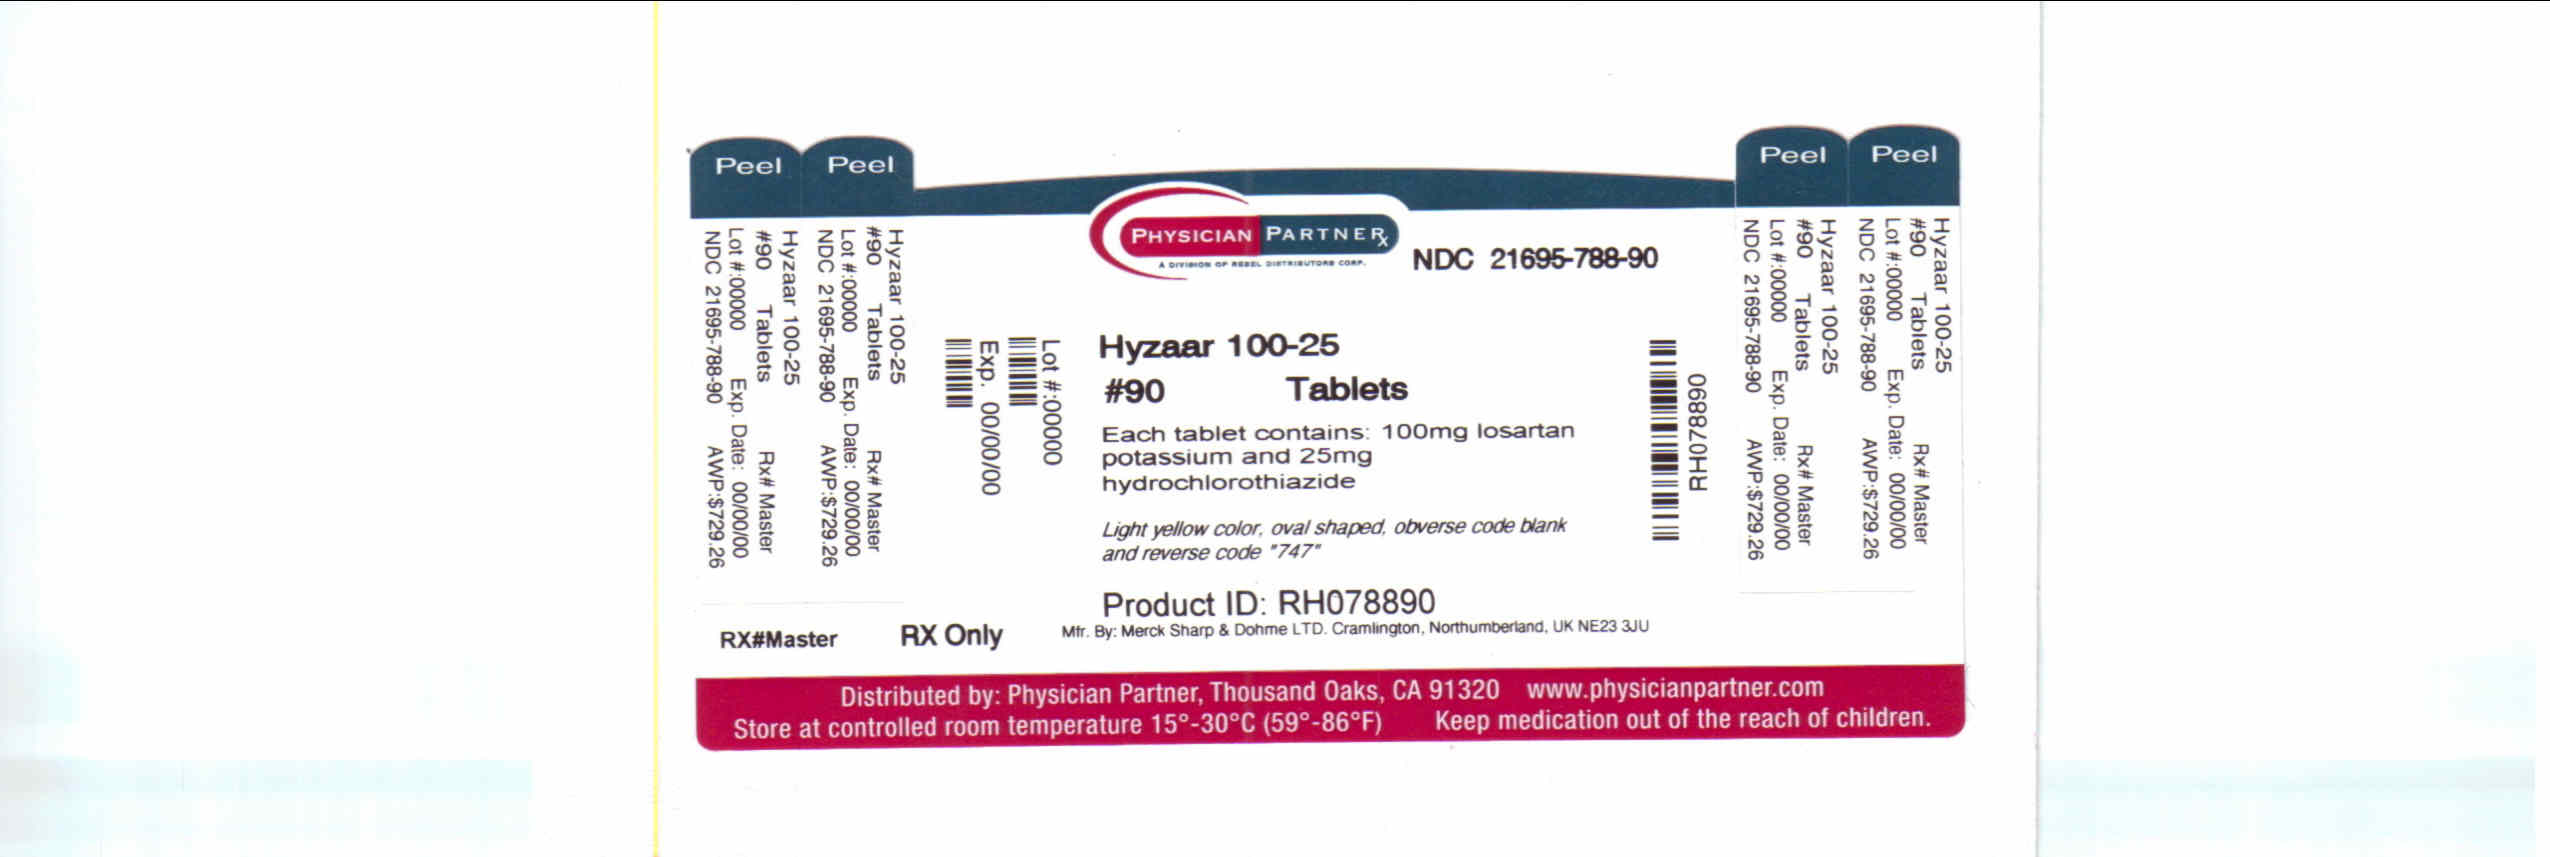 losartan potassium 50 mg) film coated tablets oral